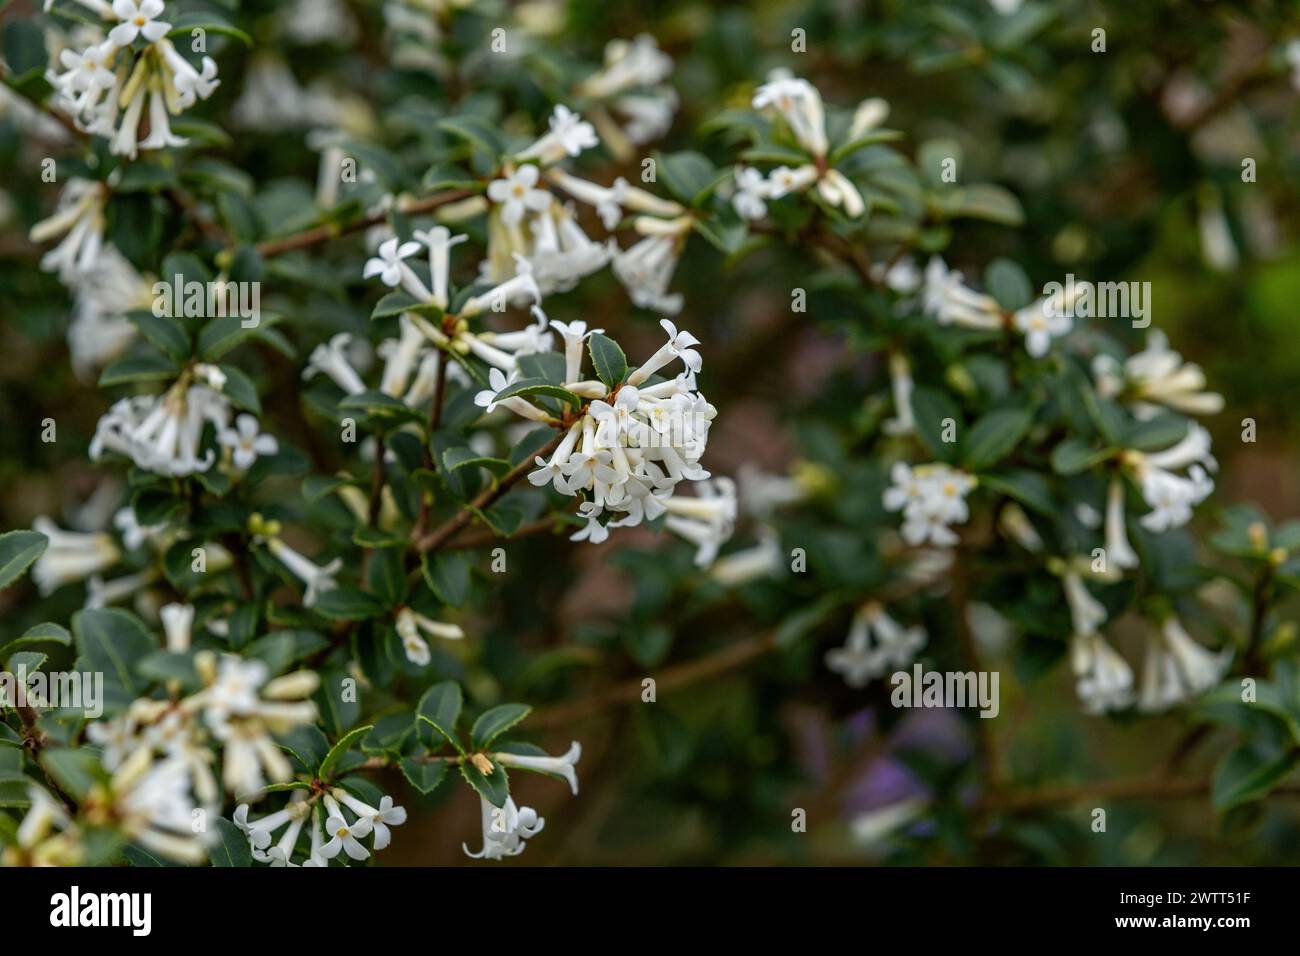 Osmanthus Delavayi (Delavay osmanthus) in full flower. This spring flowering shrub has delicate white flowers. Stock Photo